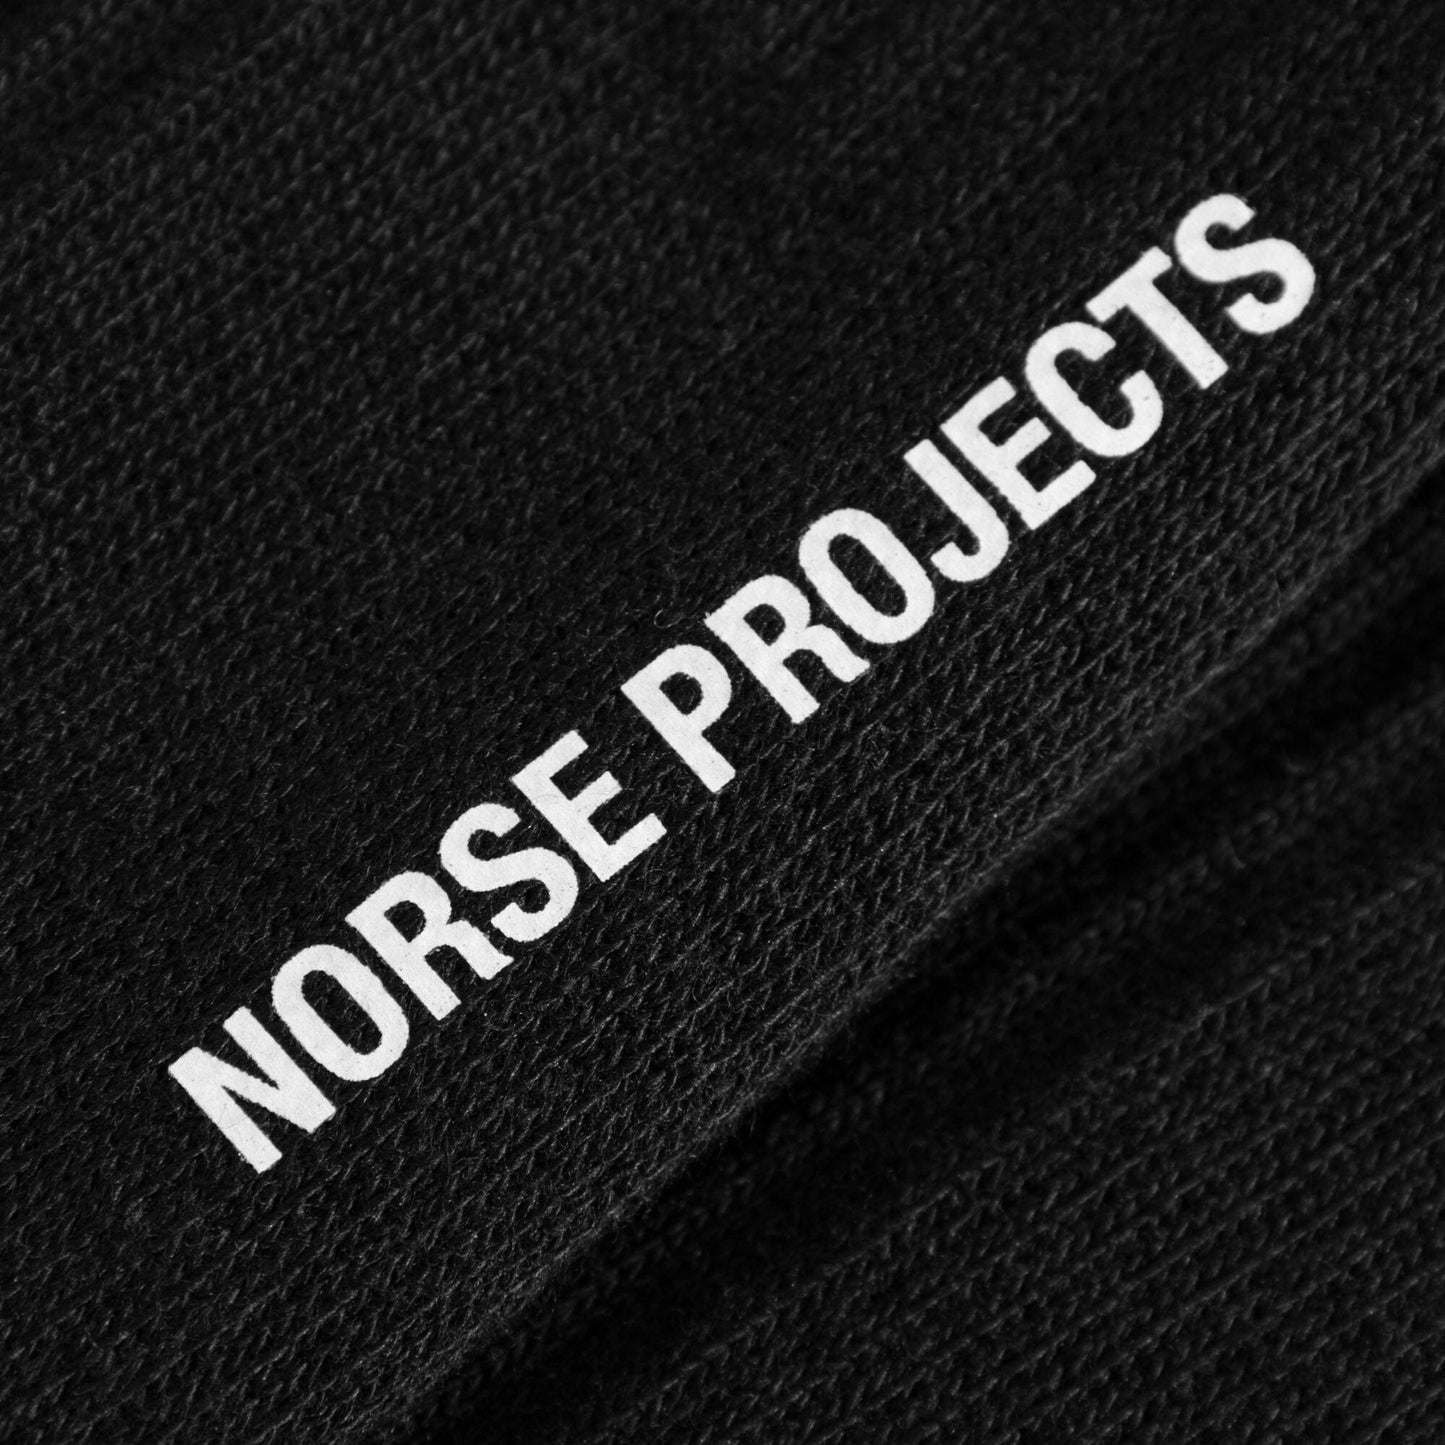 Norse Projects Bjarki Sport Sock - 2 Pack - Black Socks Norse Projects 